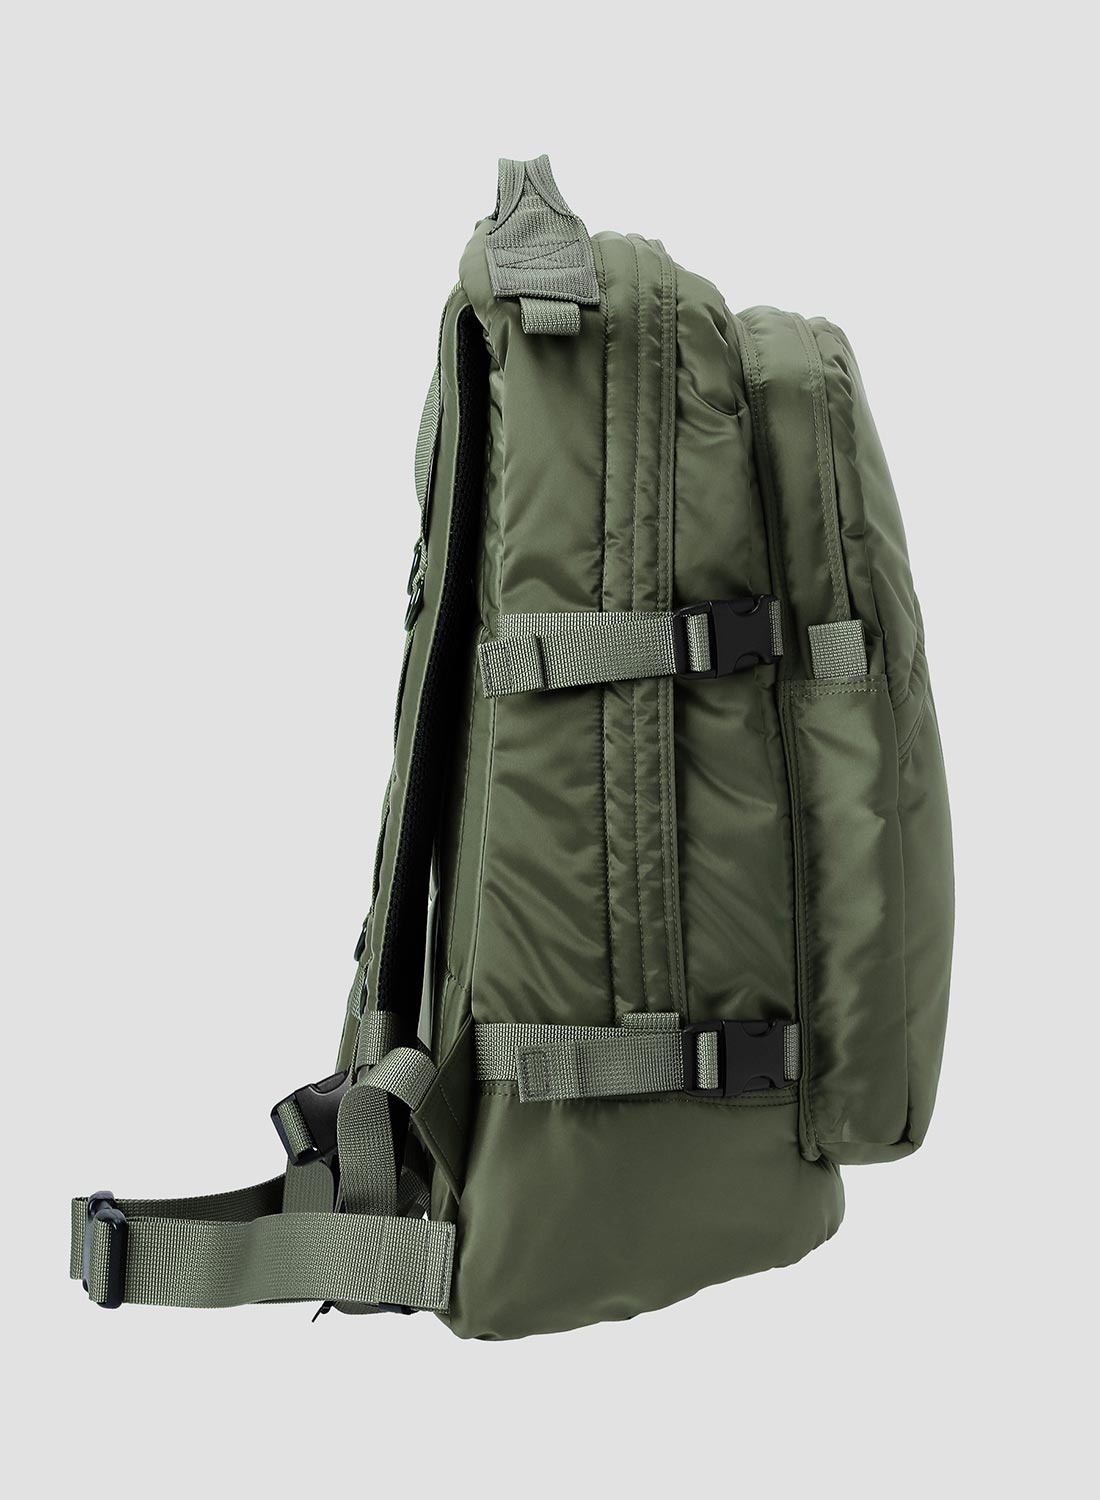 Porter-Yoshida & Co Tanker Day Backpack in Sage Green - 4